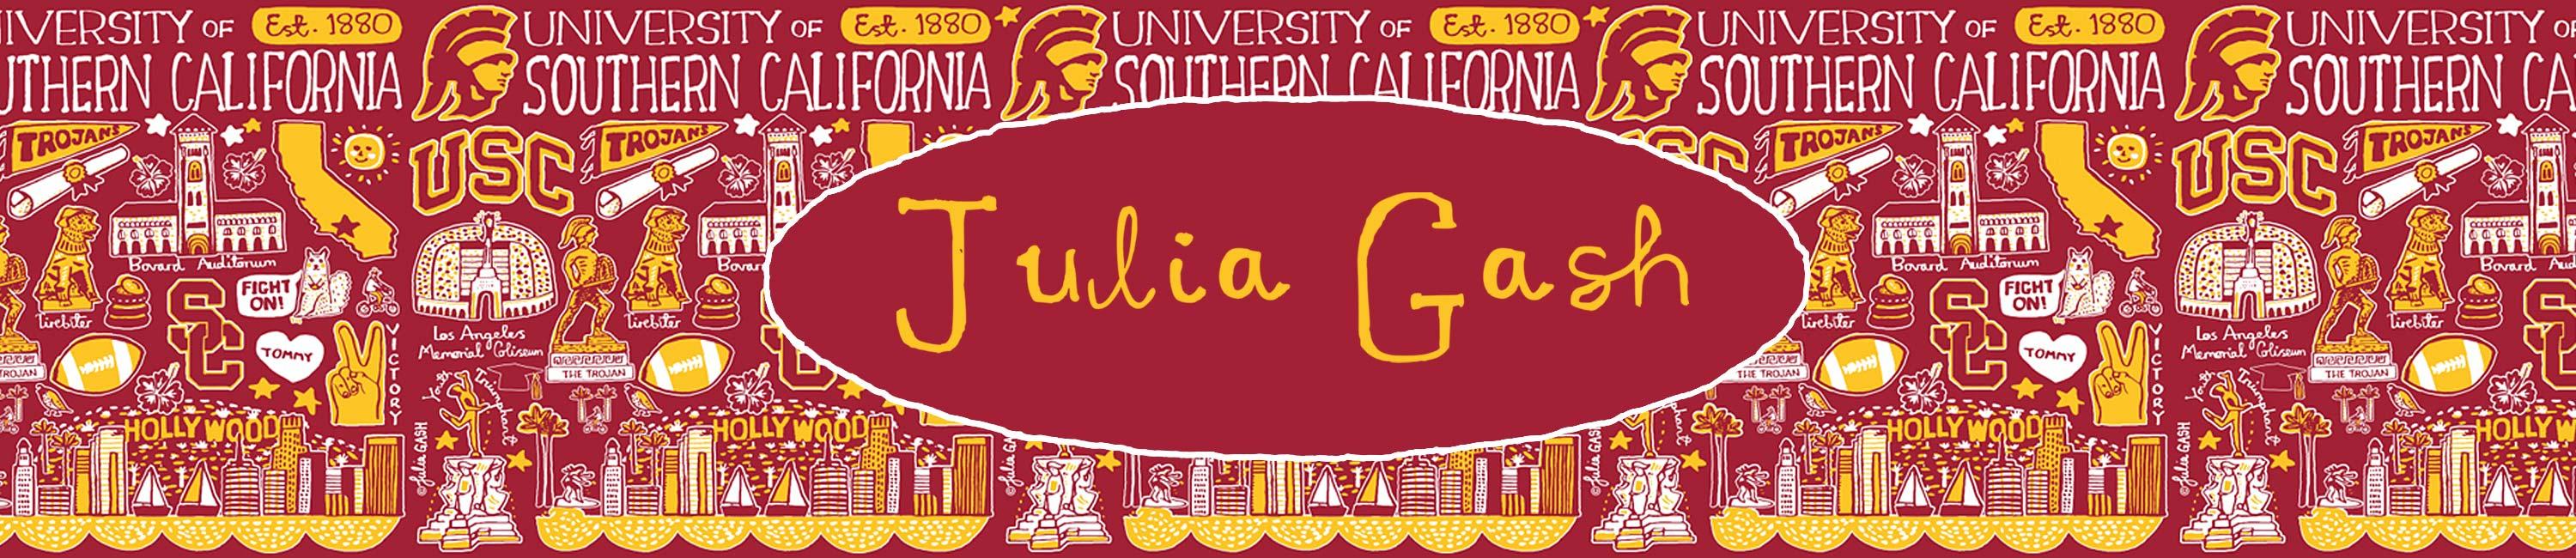 USC Julia Gash